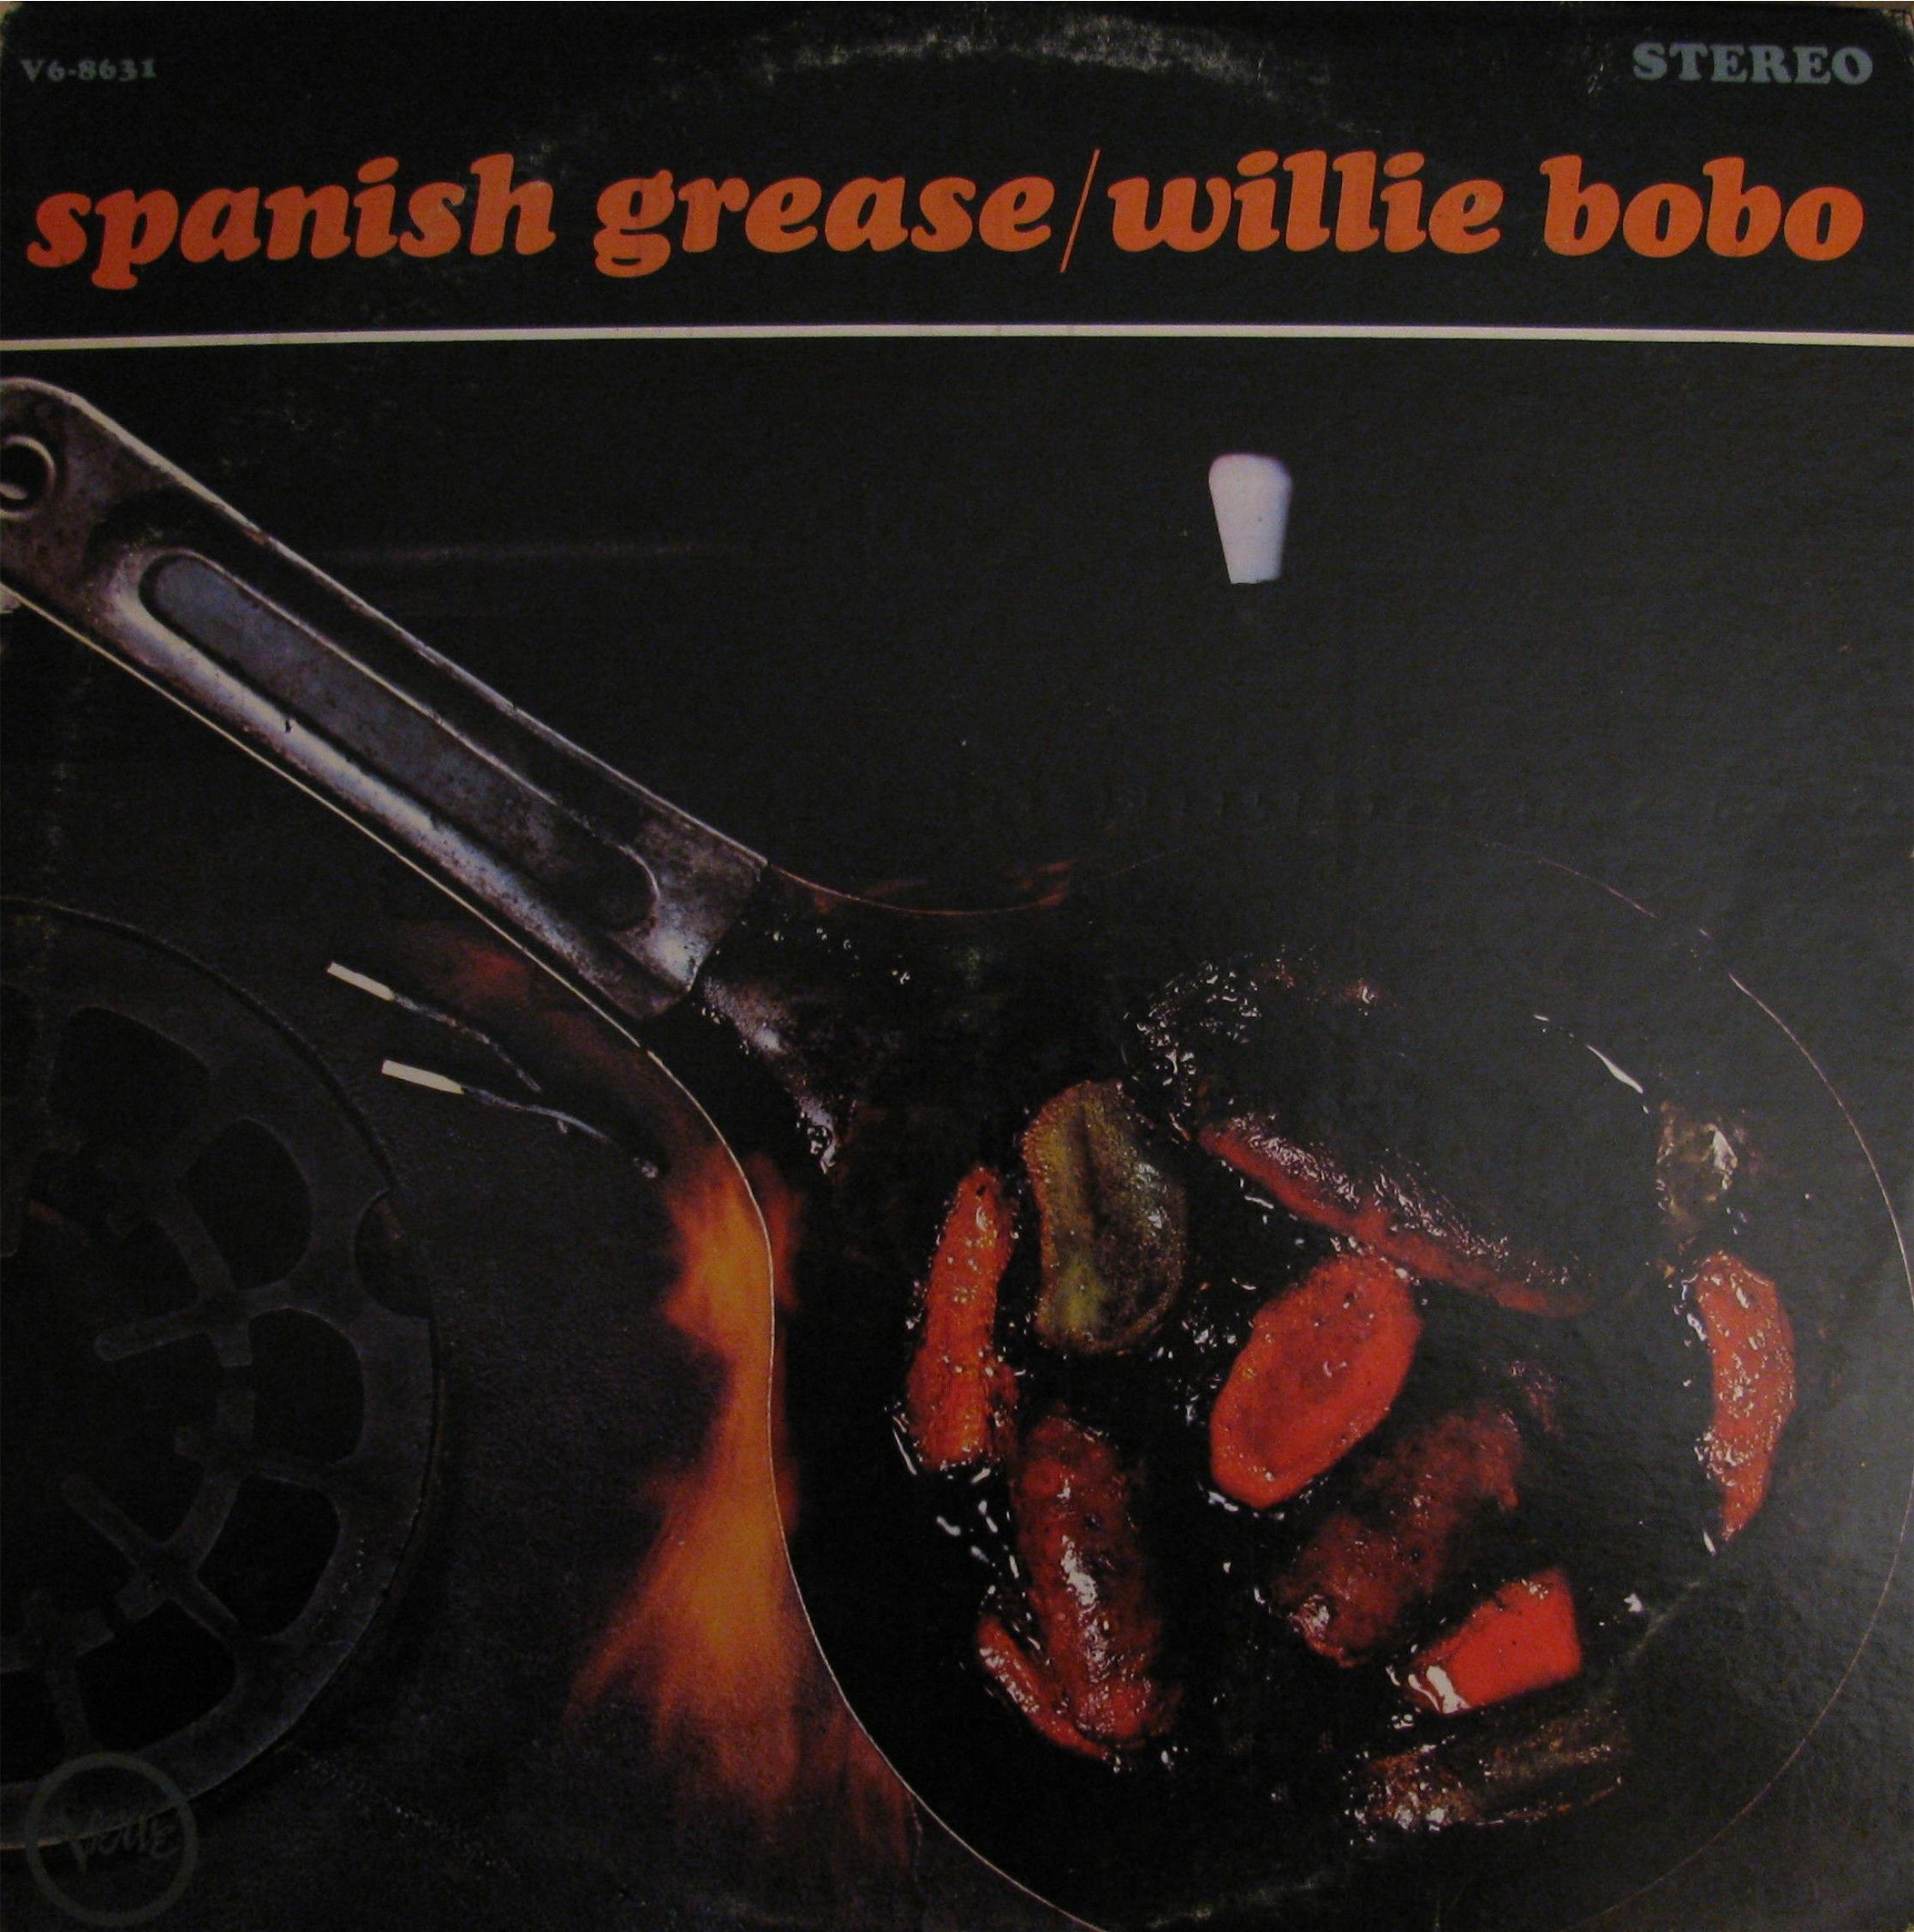 spanish grease willie bobo 320 1267127.jpg.